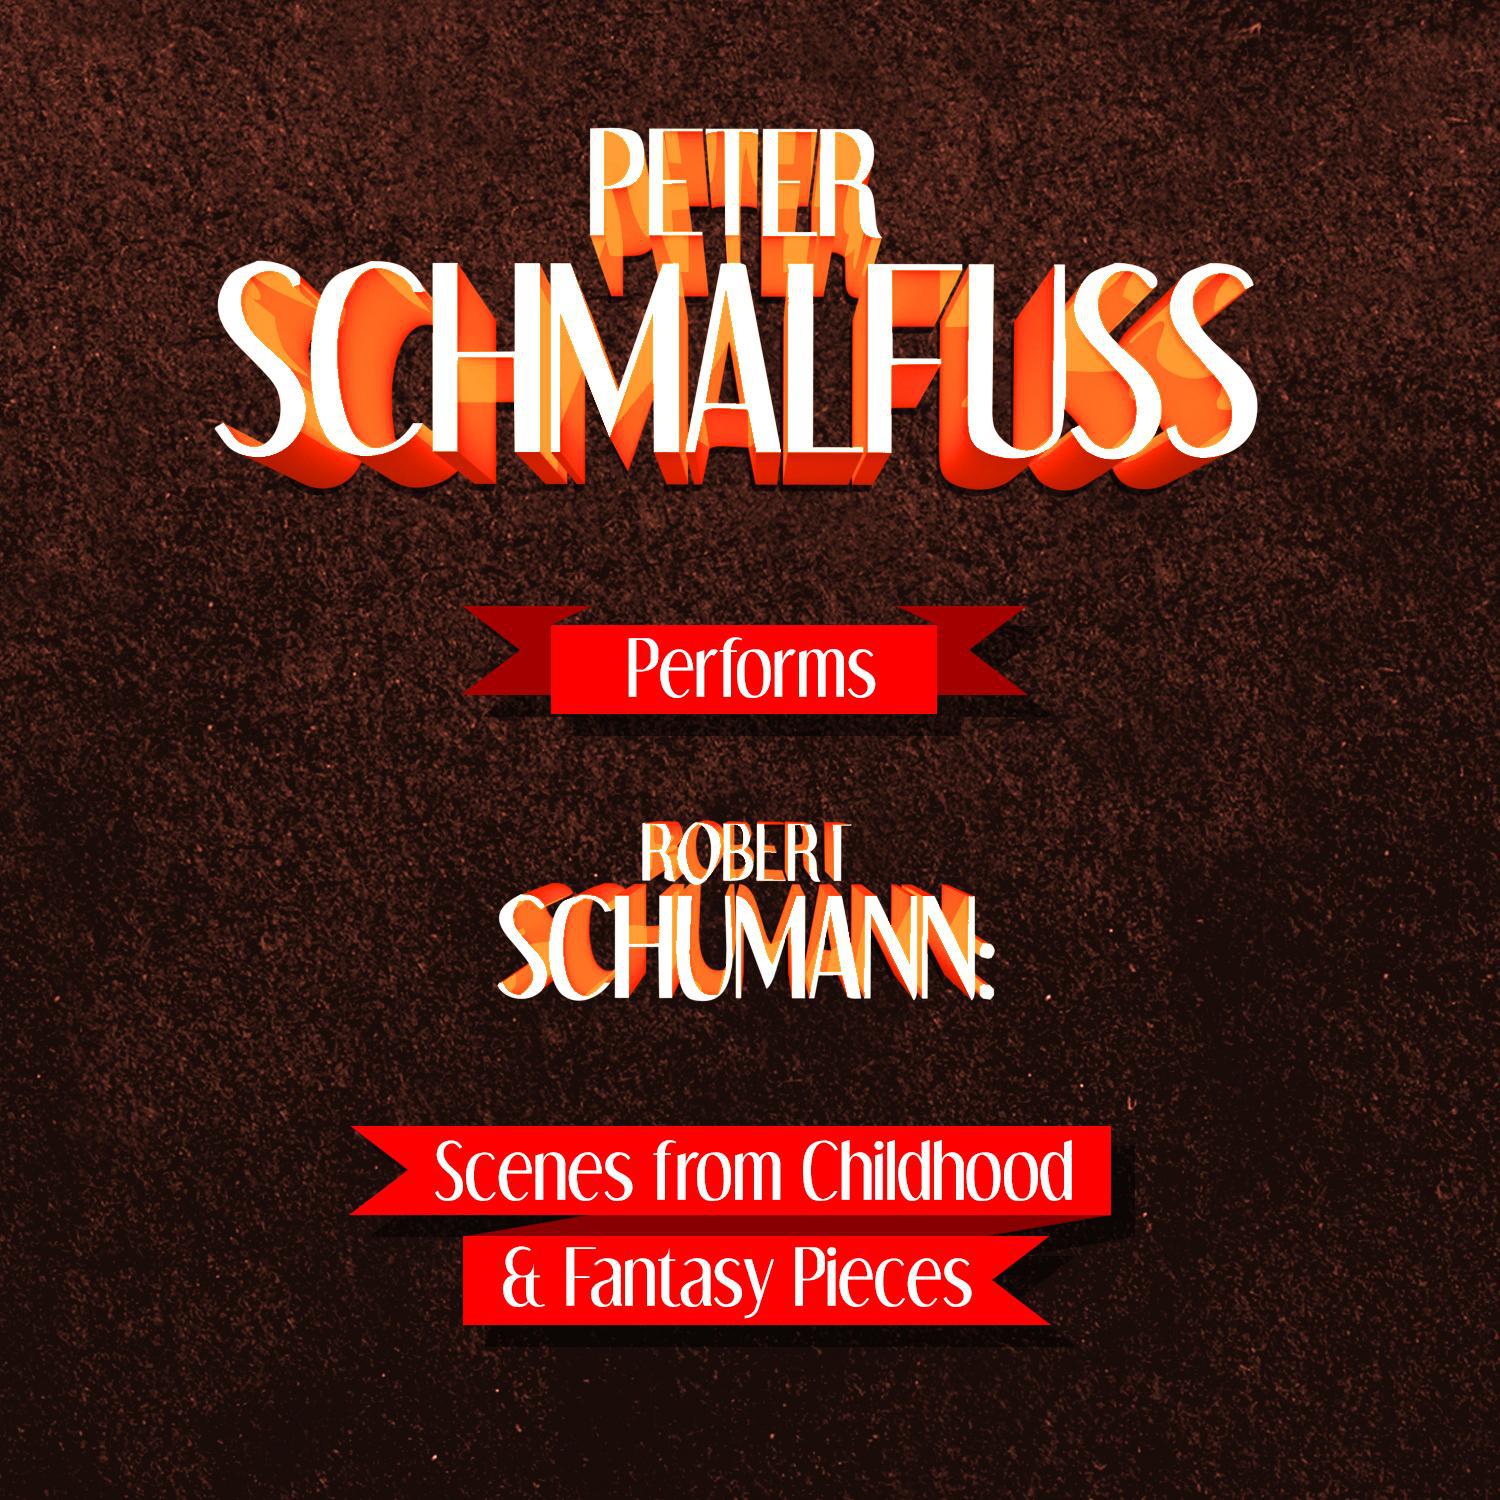 Peter Schmalfuss Performs Robert Schumann: Scenes from Childhood & Fantasy Pieces